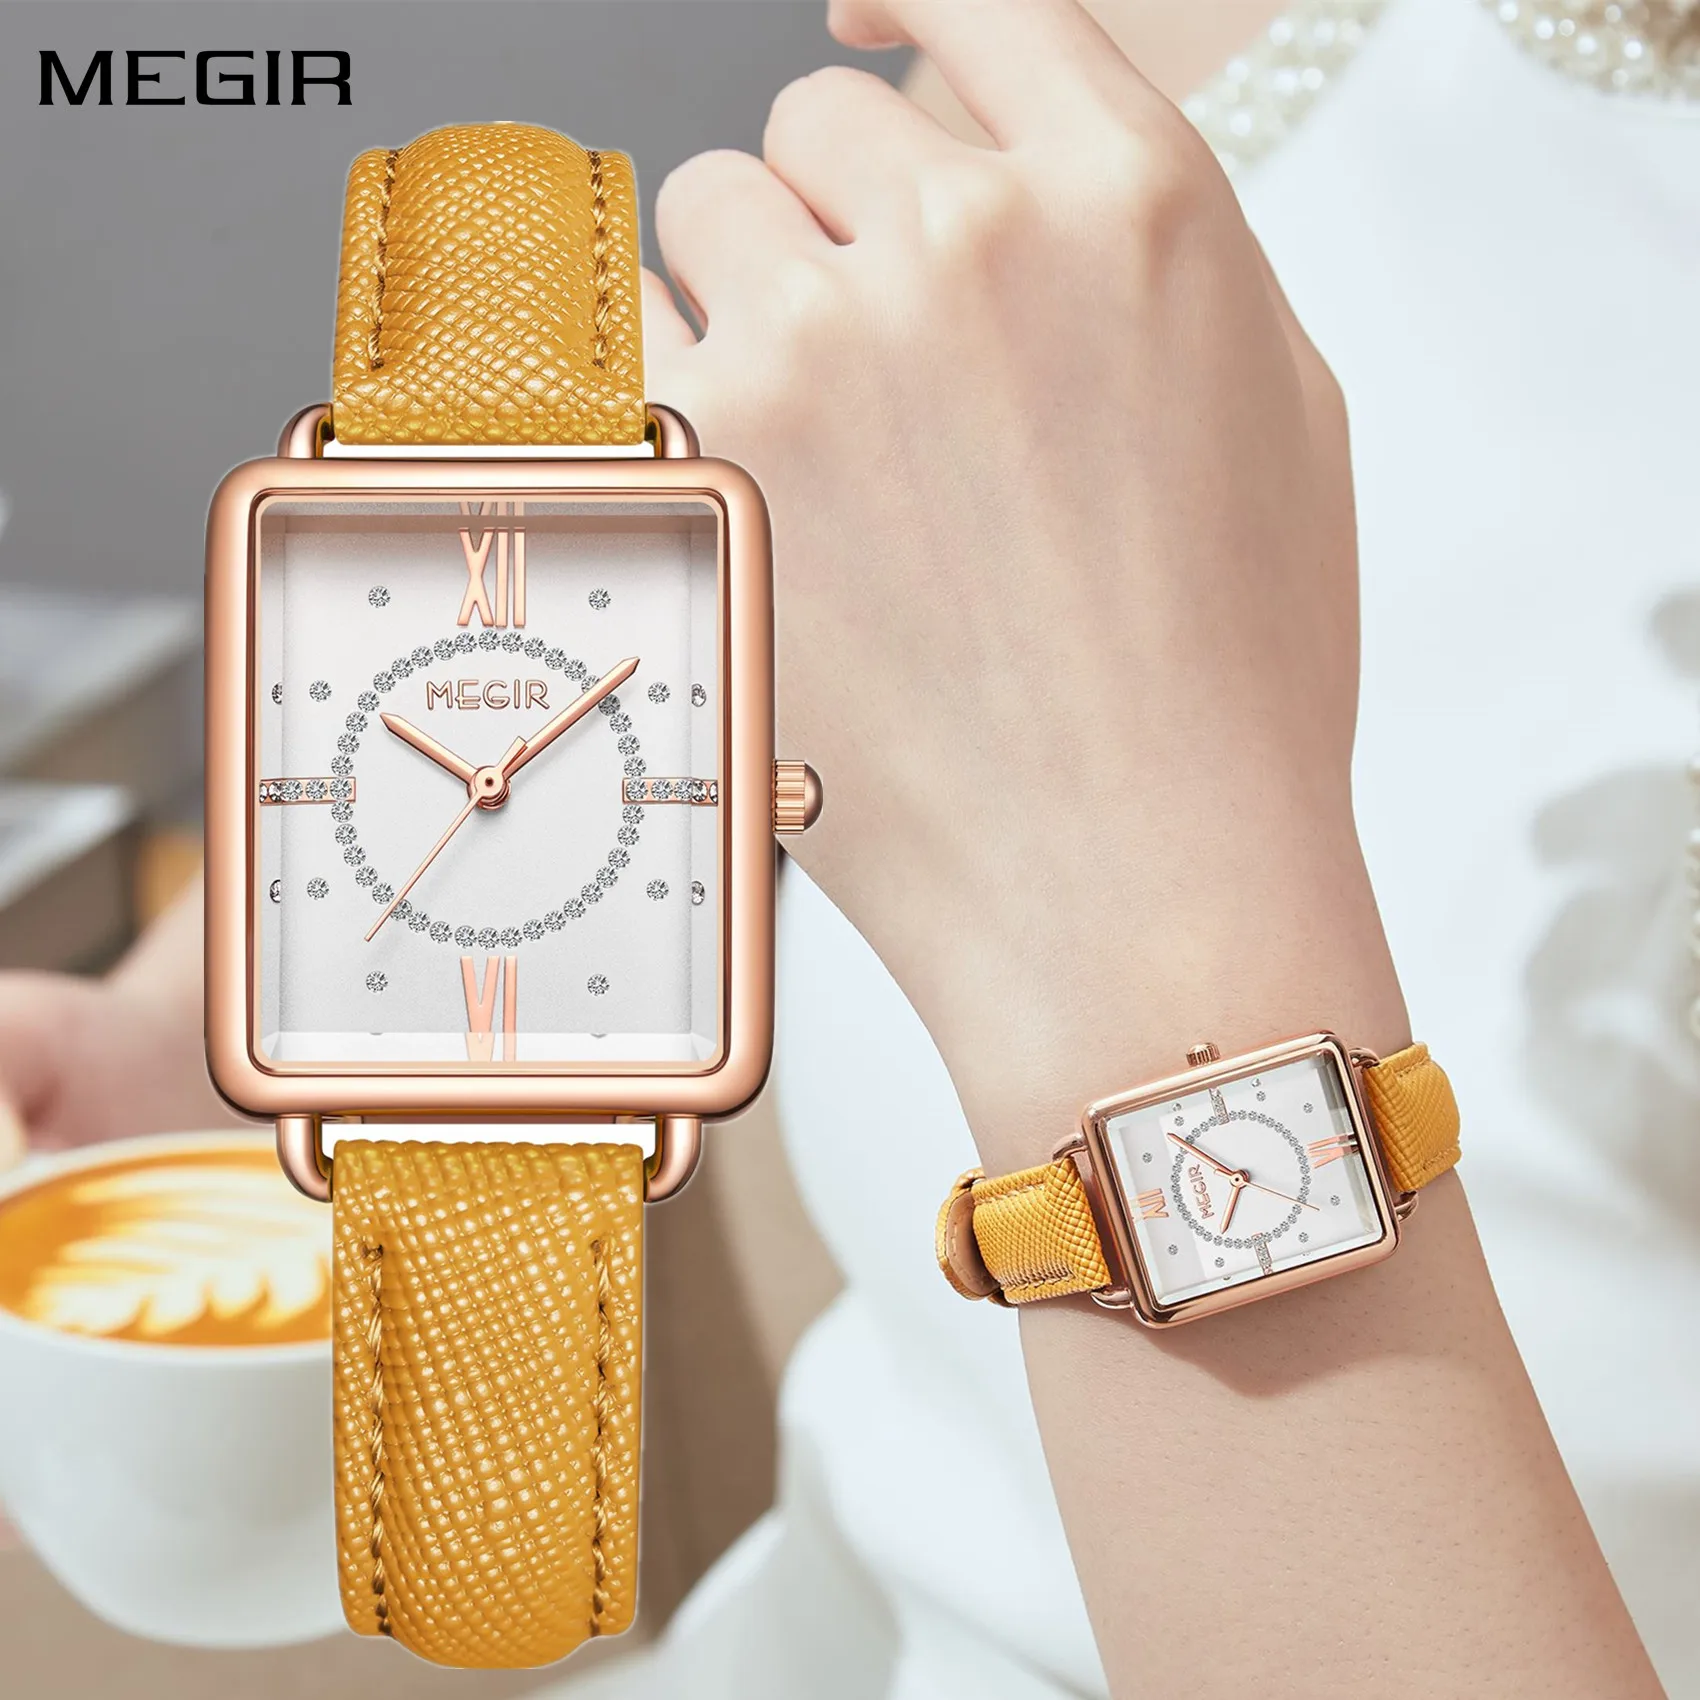 

MEGIR Women Watch Luxury Fashion Leather Strap Ladies Quartz Wristwatch Casual Sport Wrist Watches Dress Clock Relogio Feminino